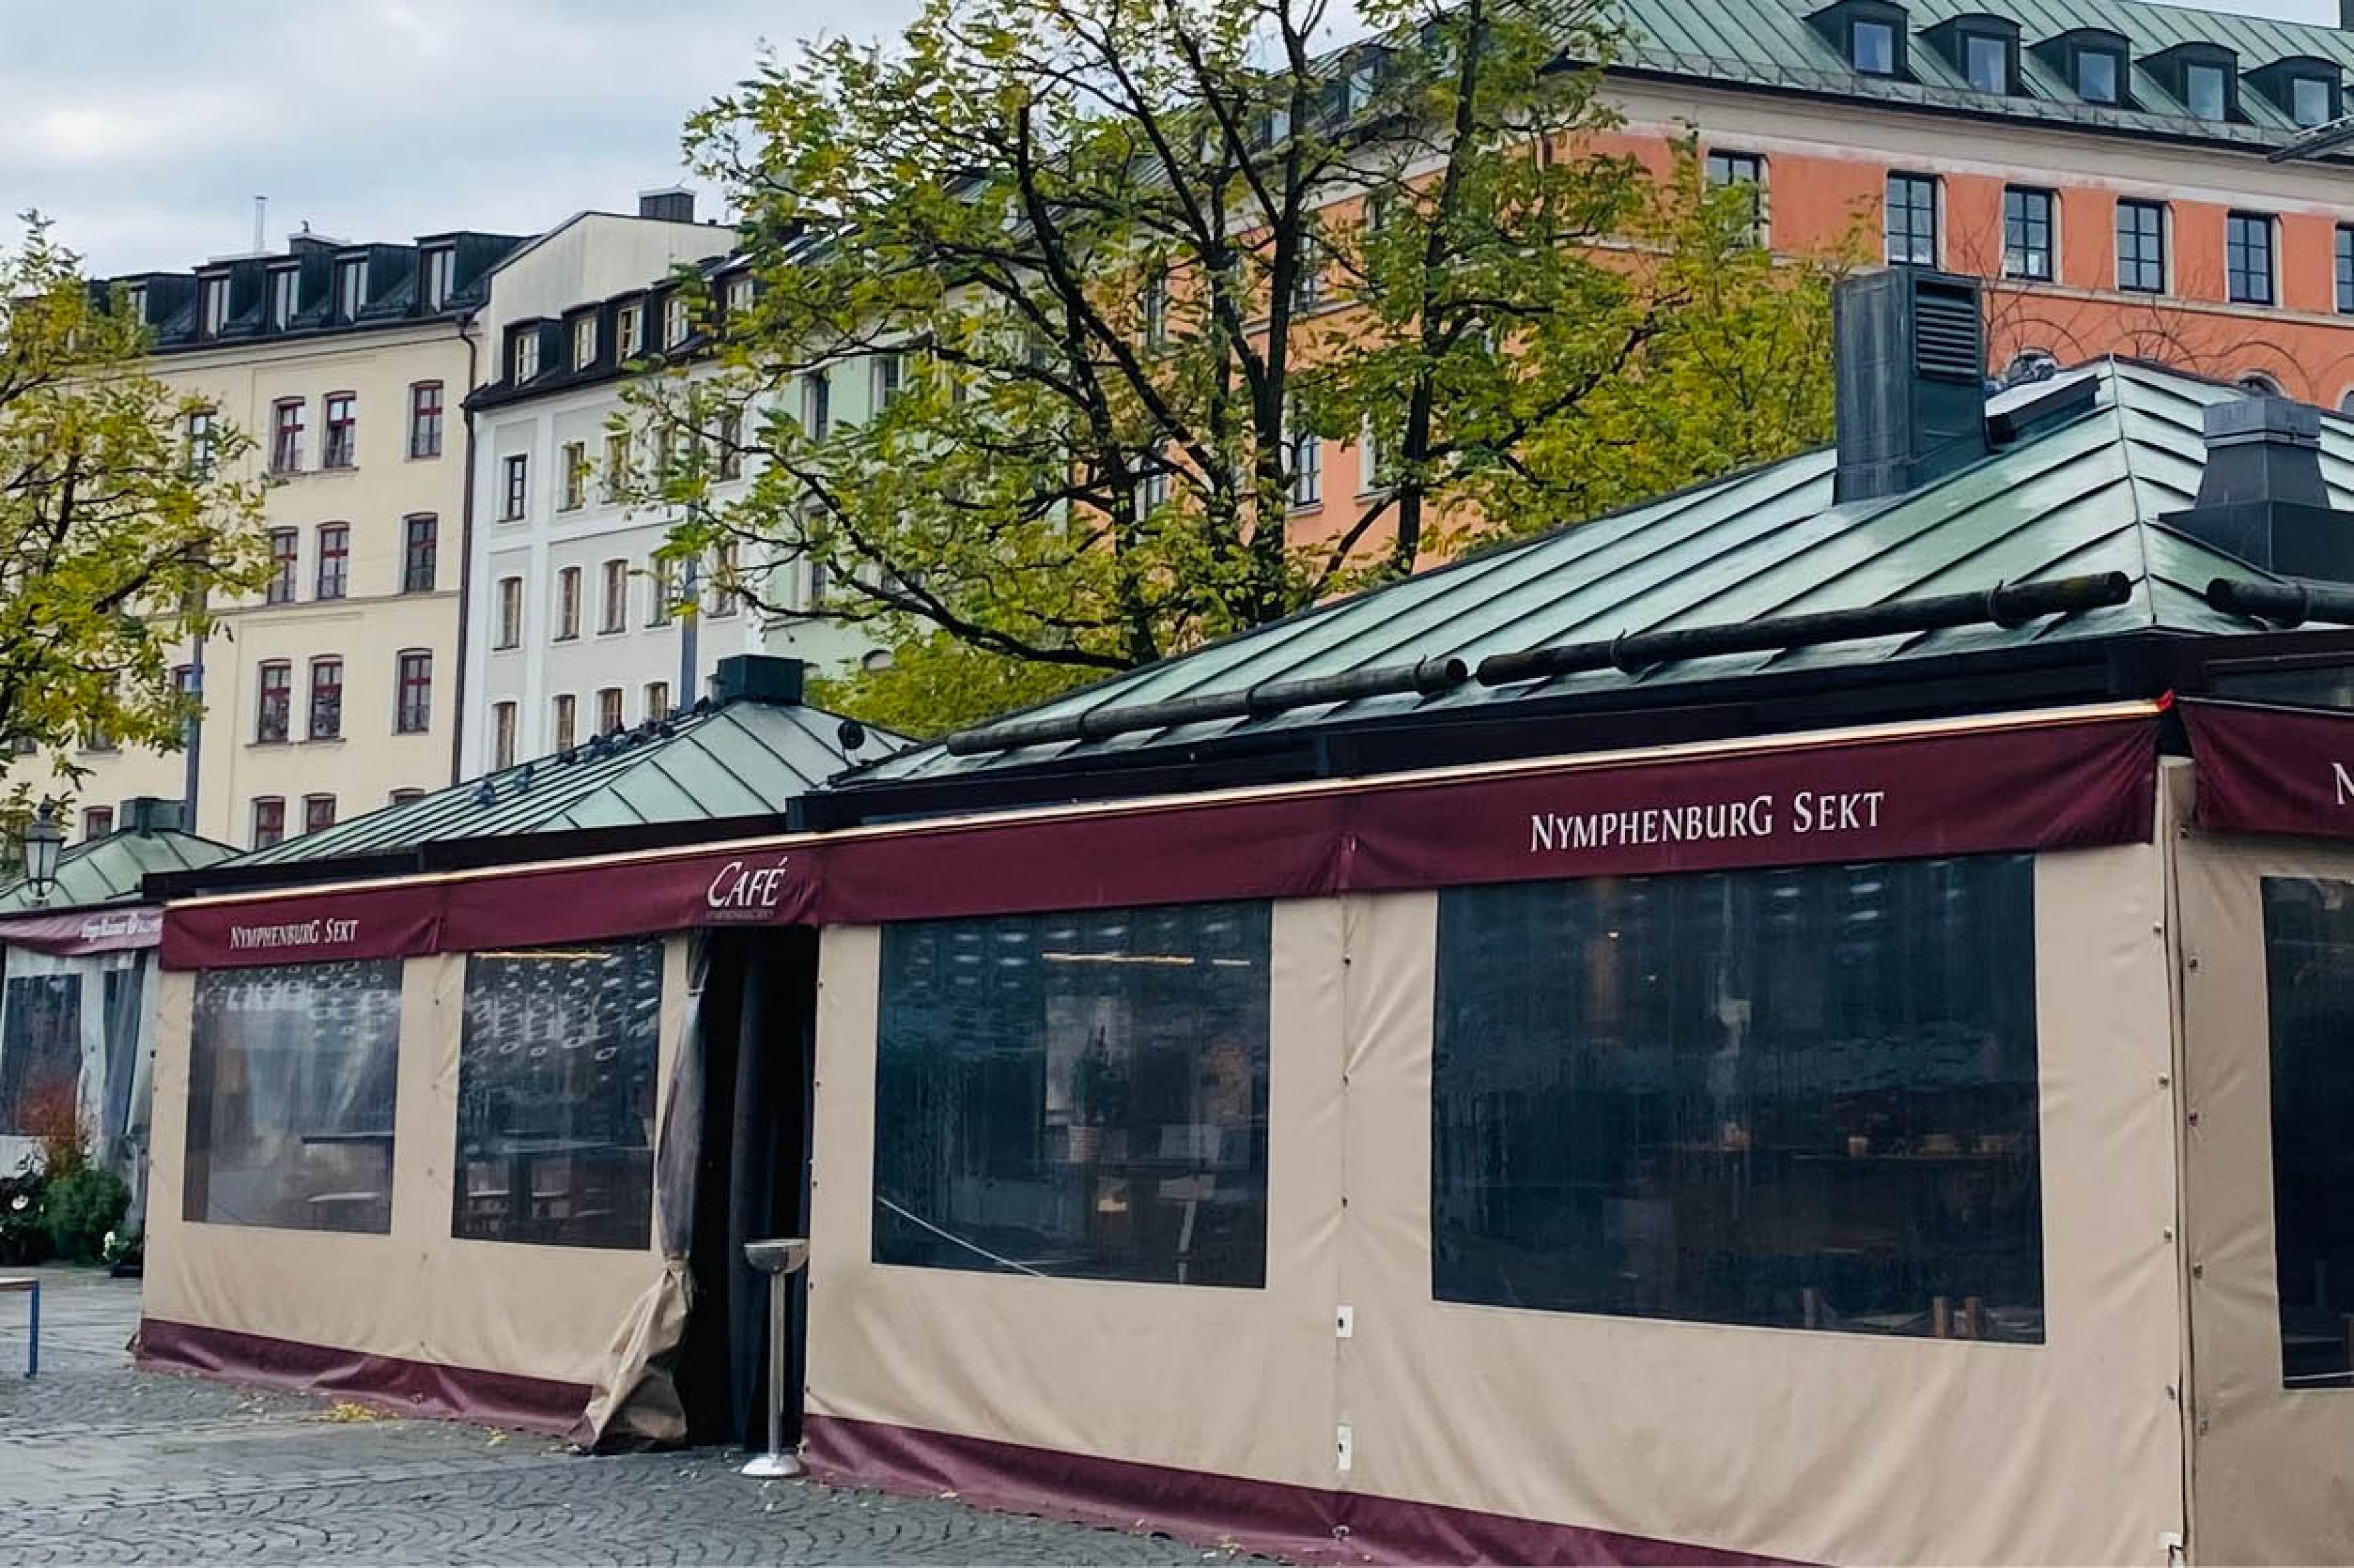 The tented restaurant and cafe Nymphenburg Sekt at the Viktualienmarkt in Munich